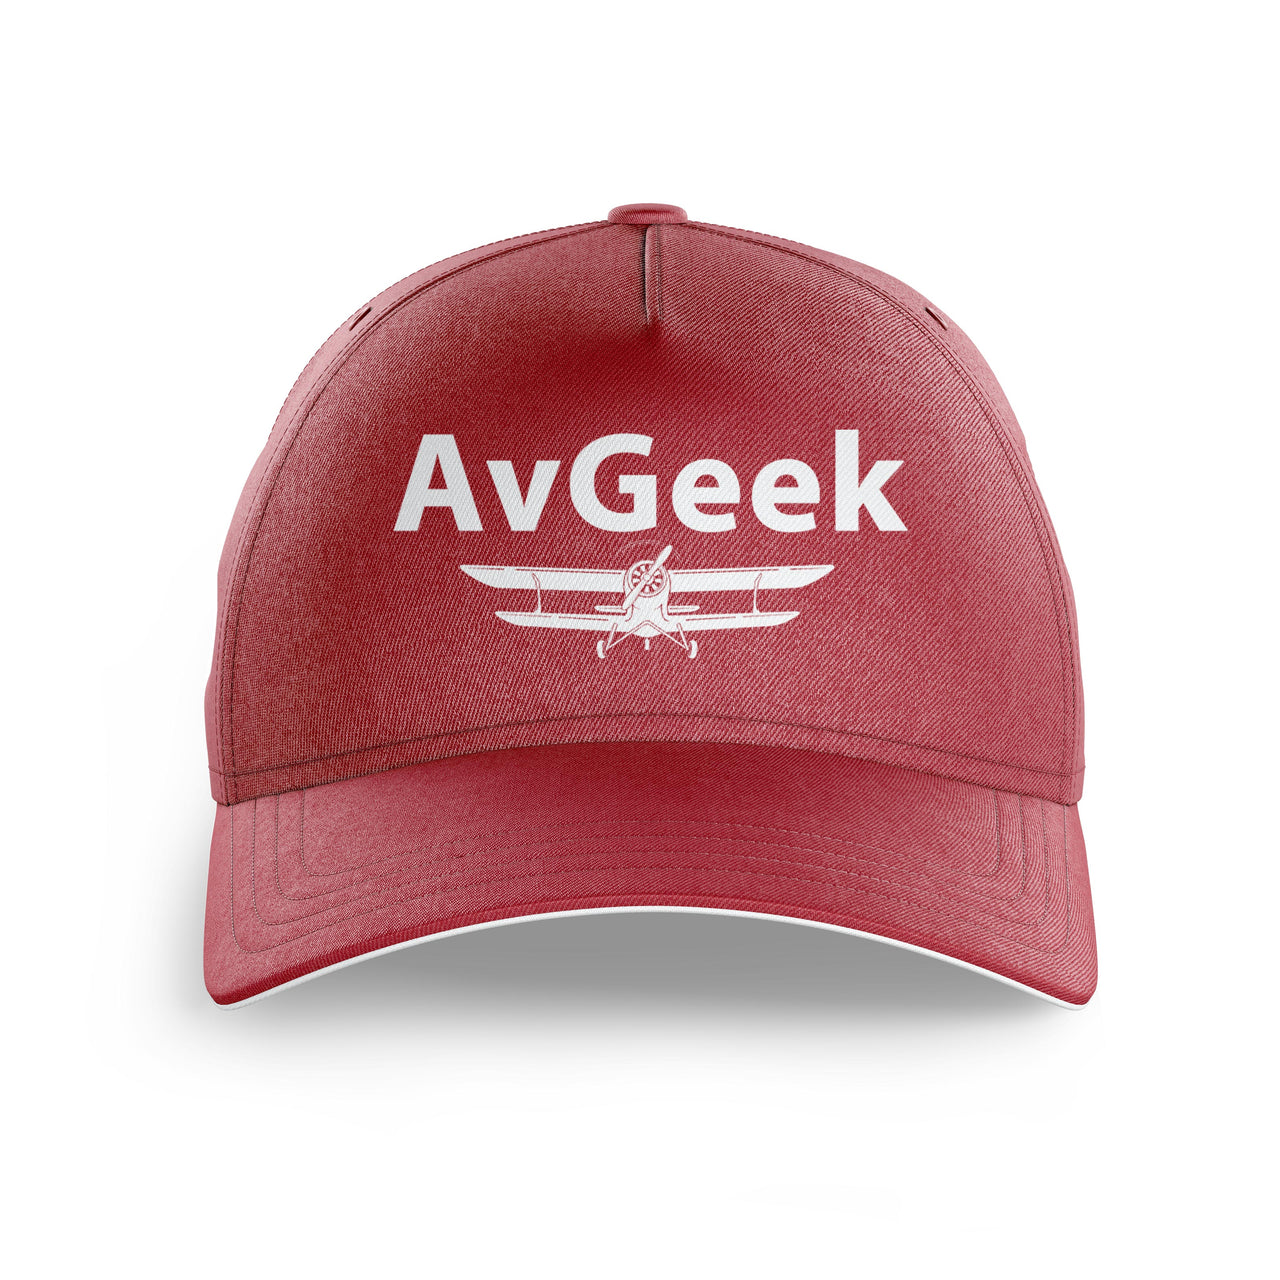 Avgeek Printed Hats